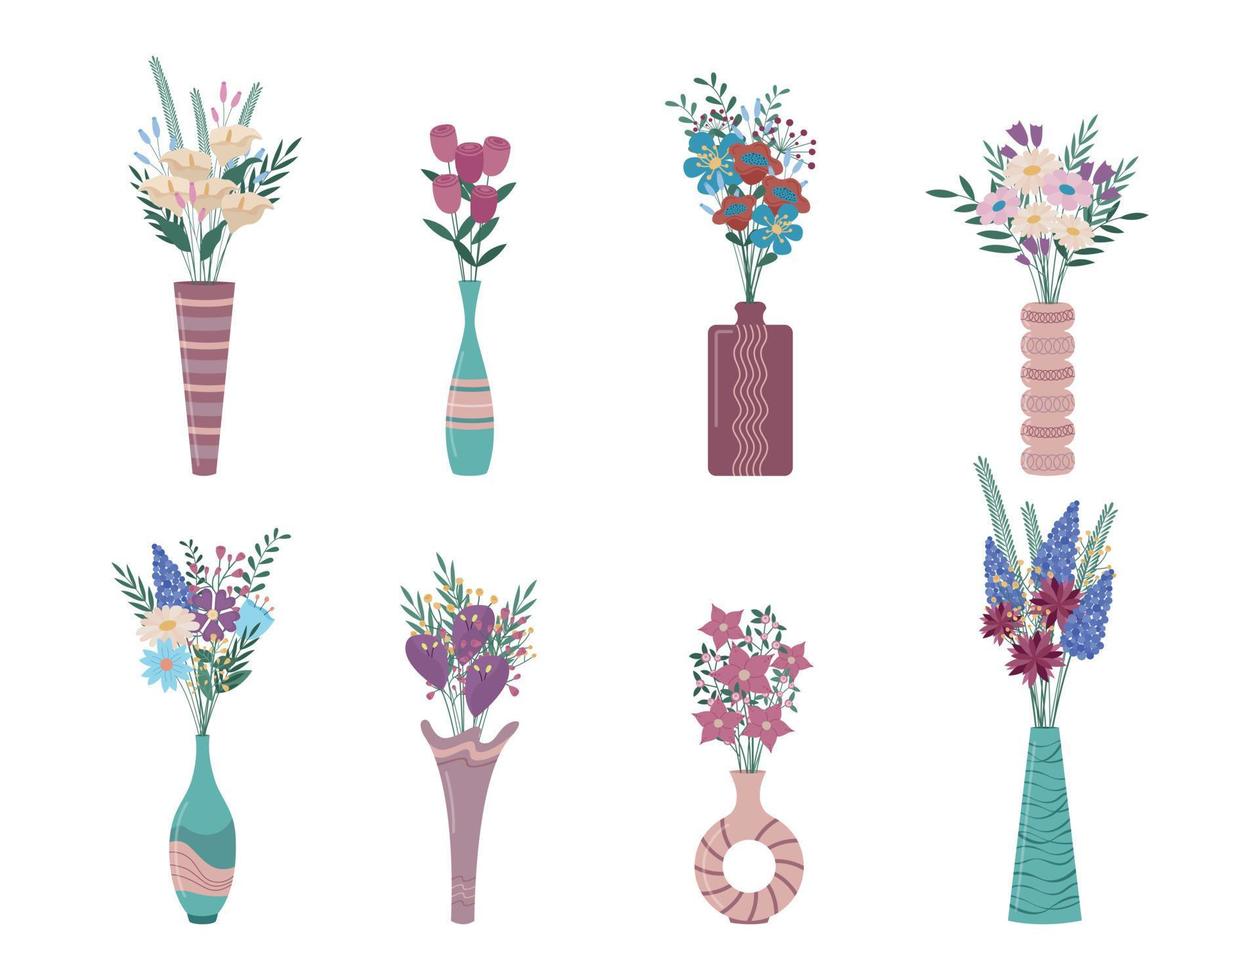 blommor i vaser vektor set. platt samling av trendiga boho keramiska kannor och vaser med buketter av blommor. inredningselement isolerade